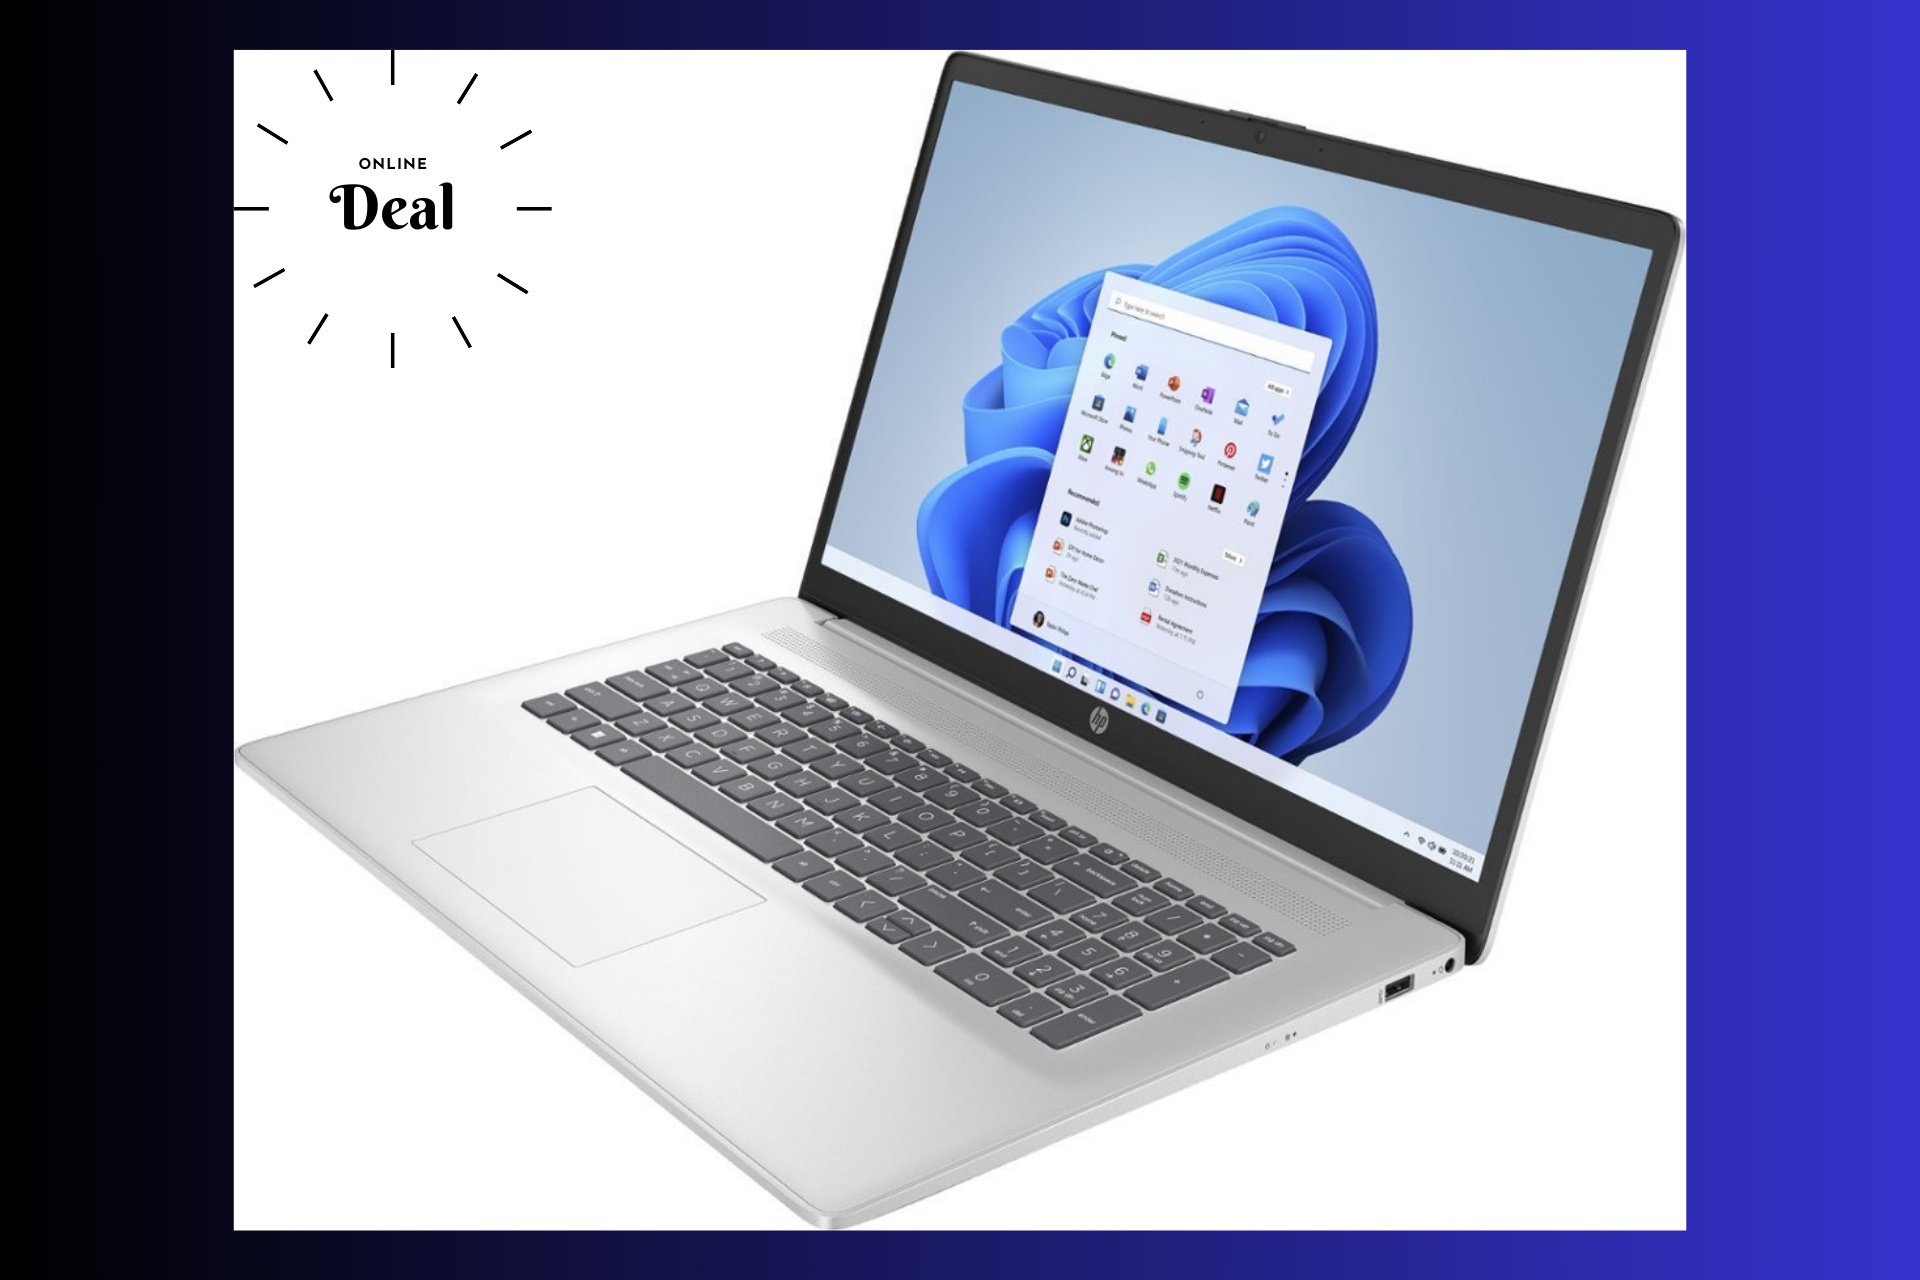 HP Laptop 17 deal from Best Buy